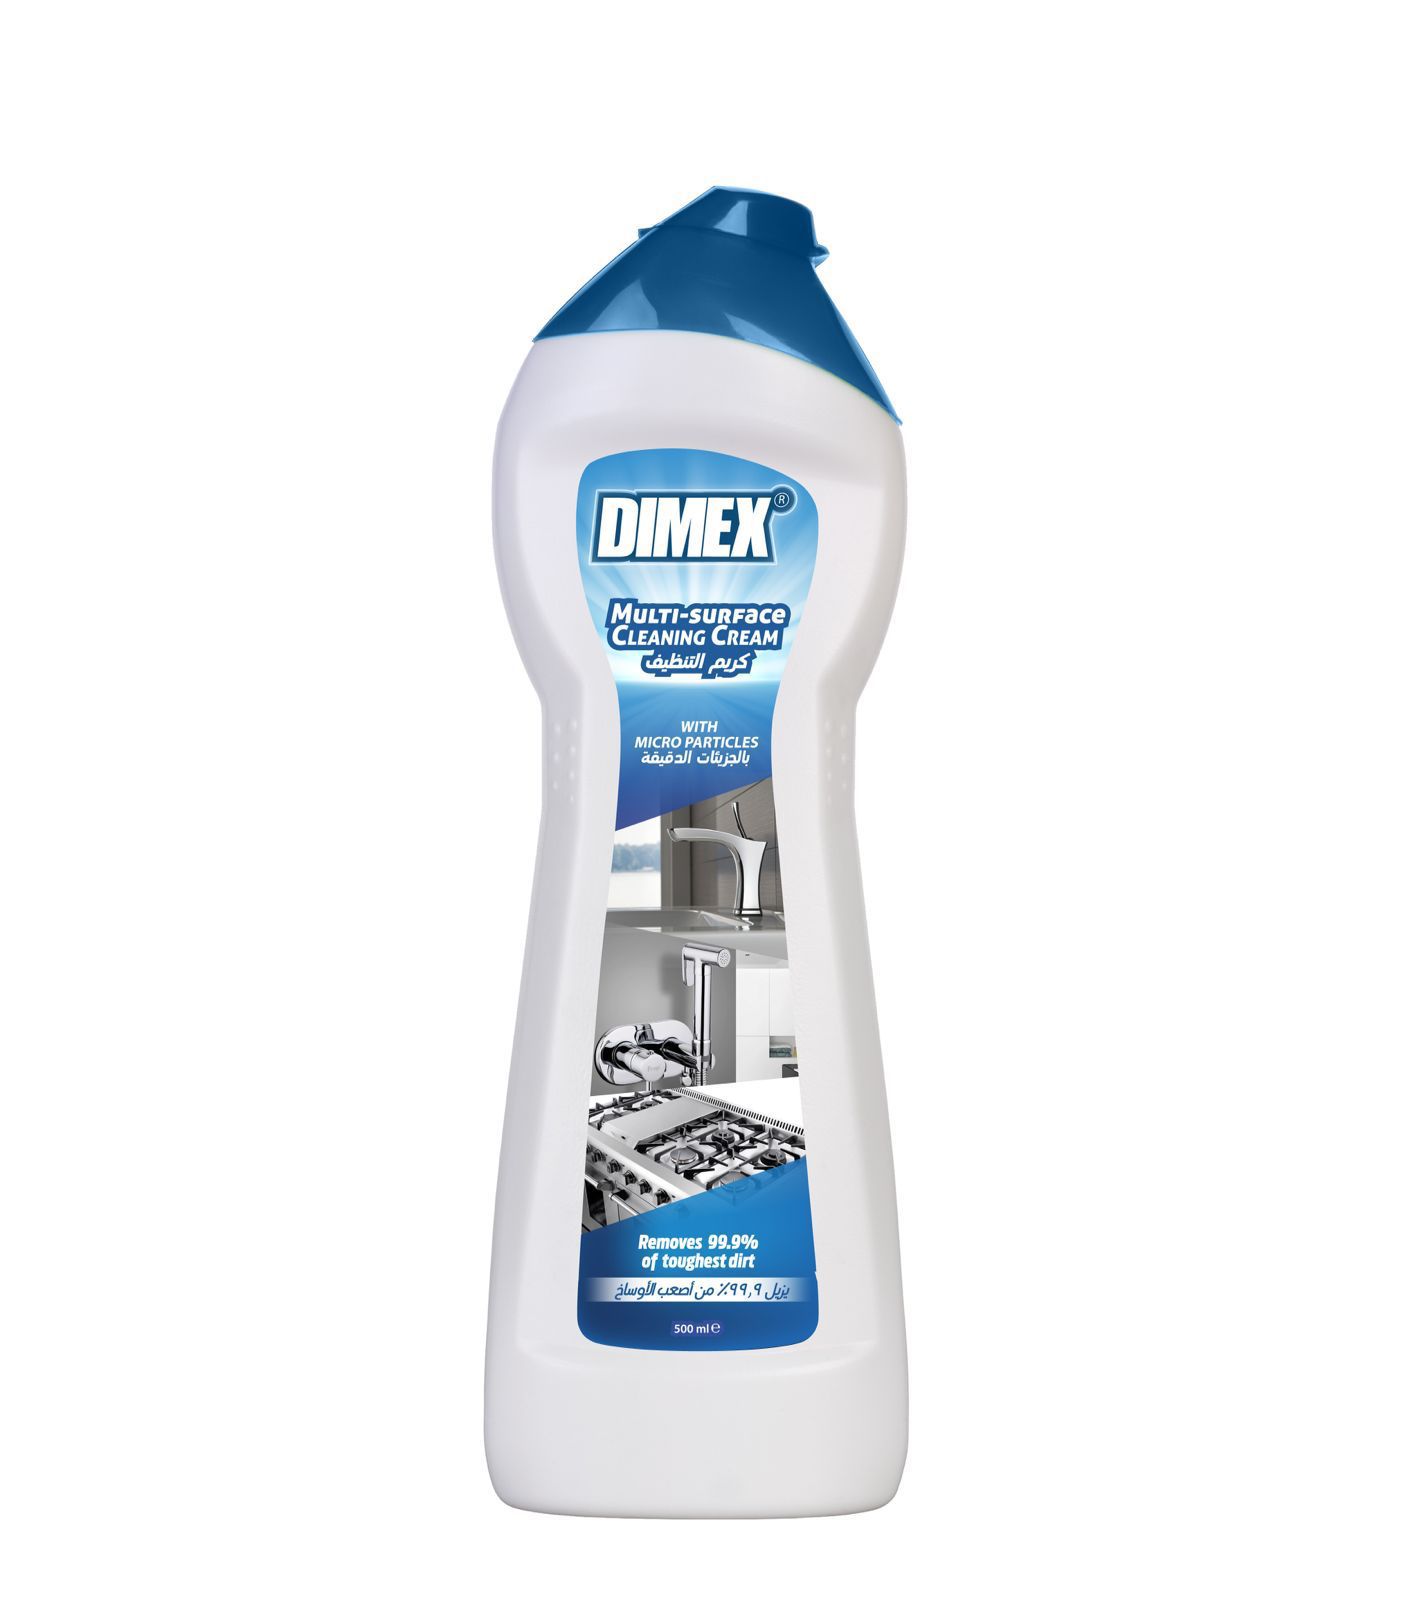 Dimex Multi-surface Cleaning Cream 500ml